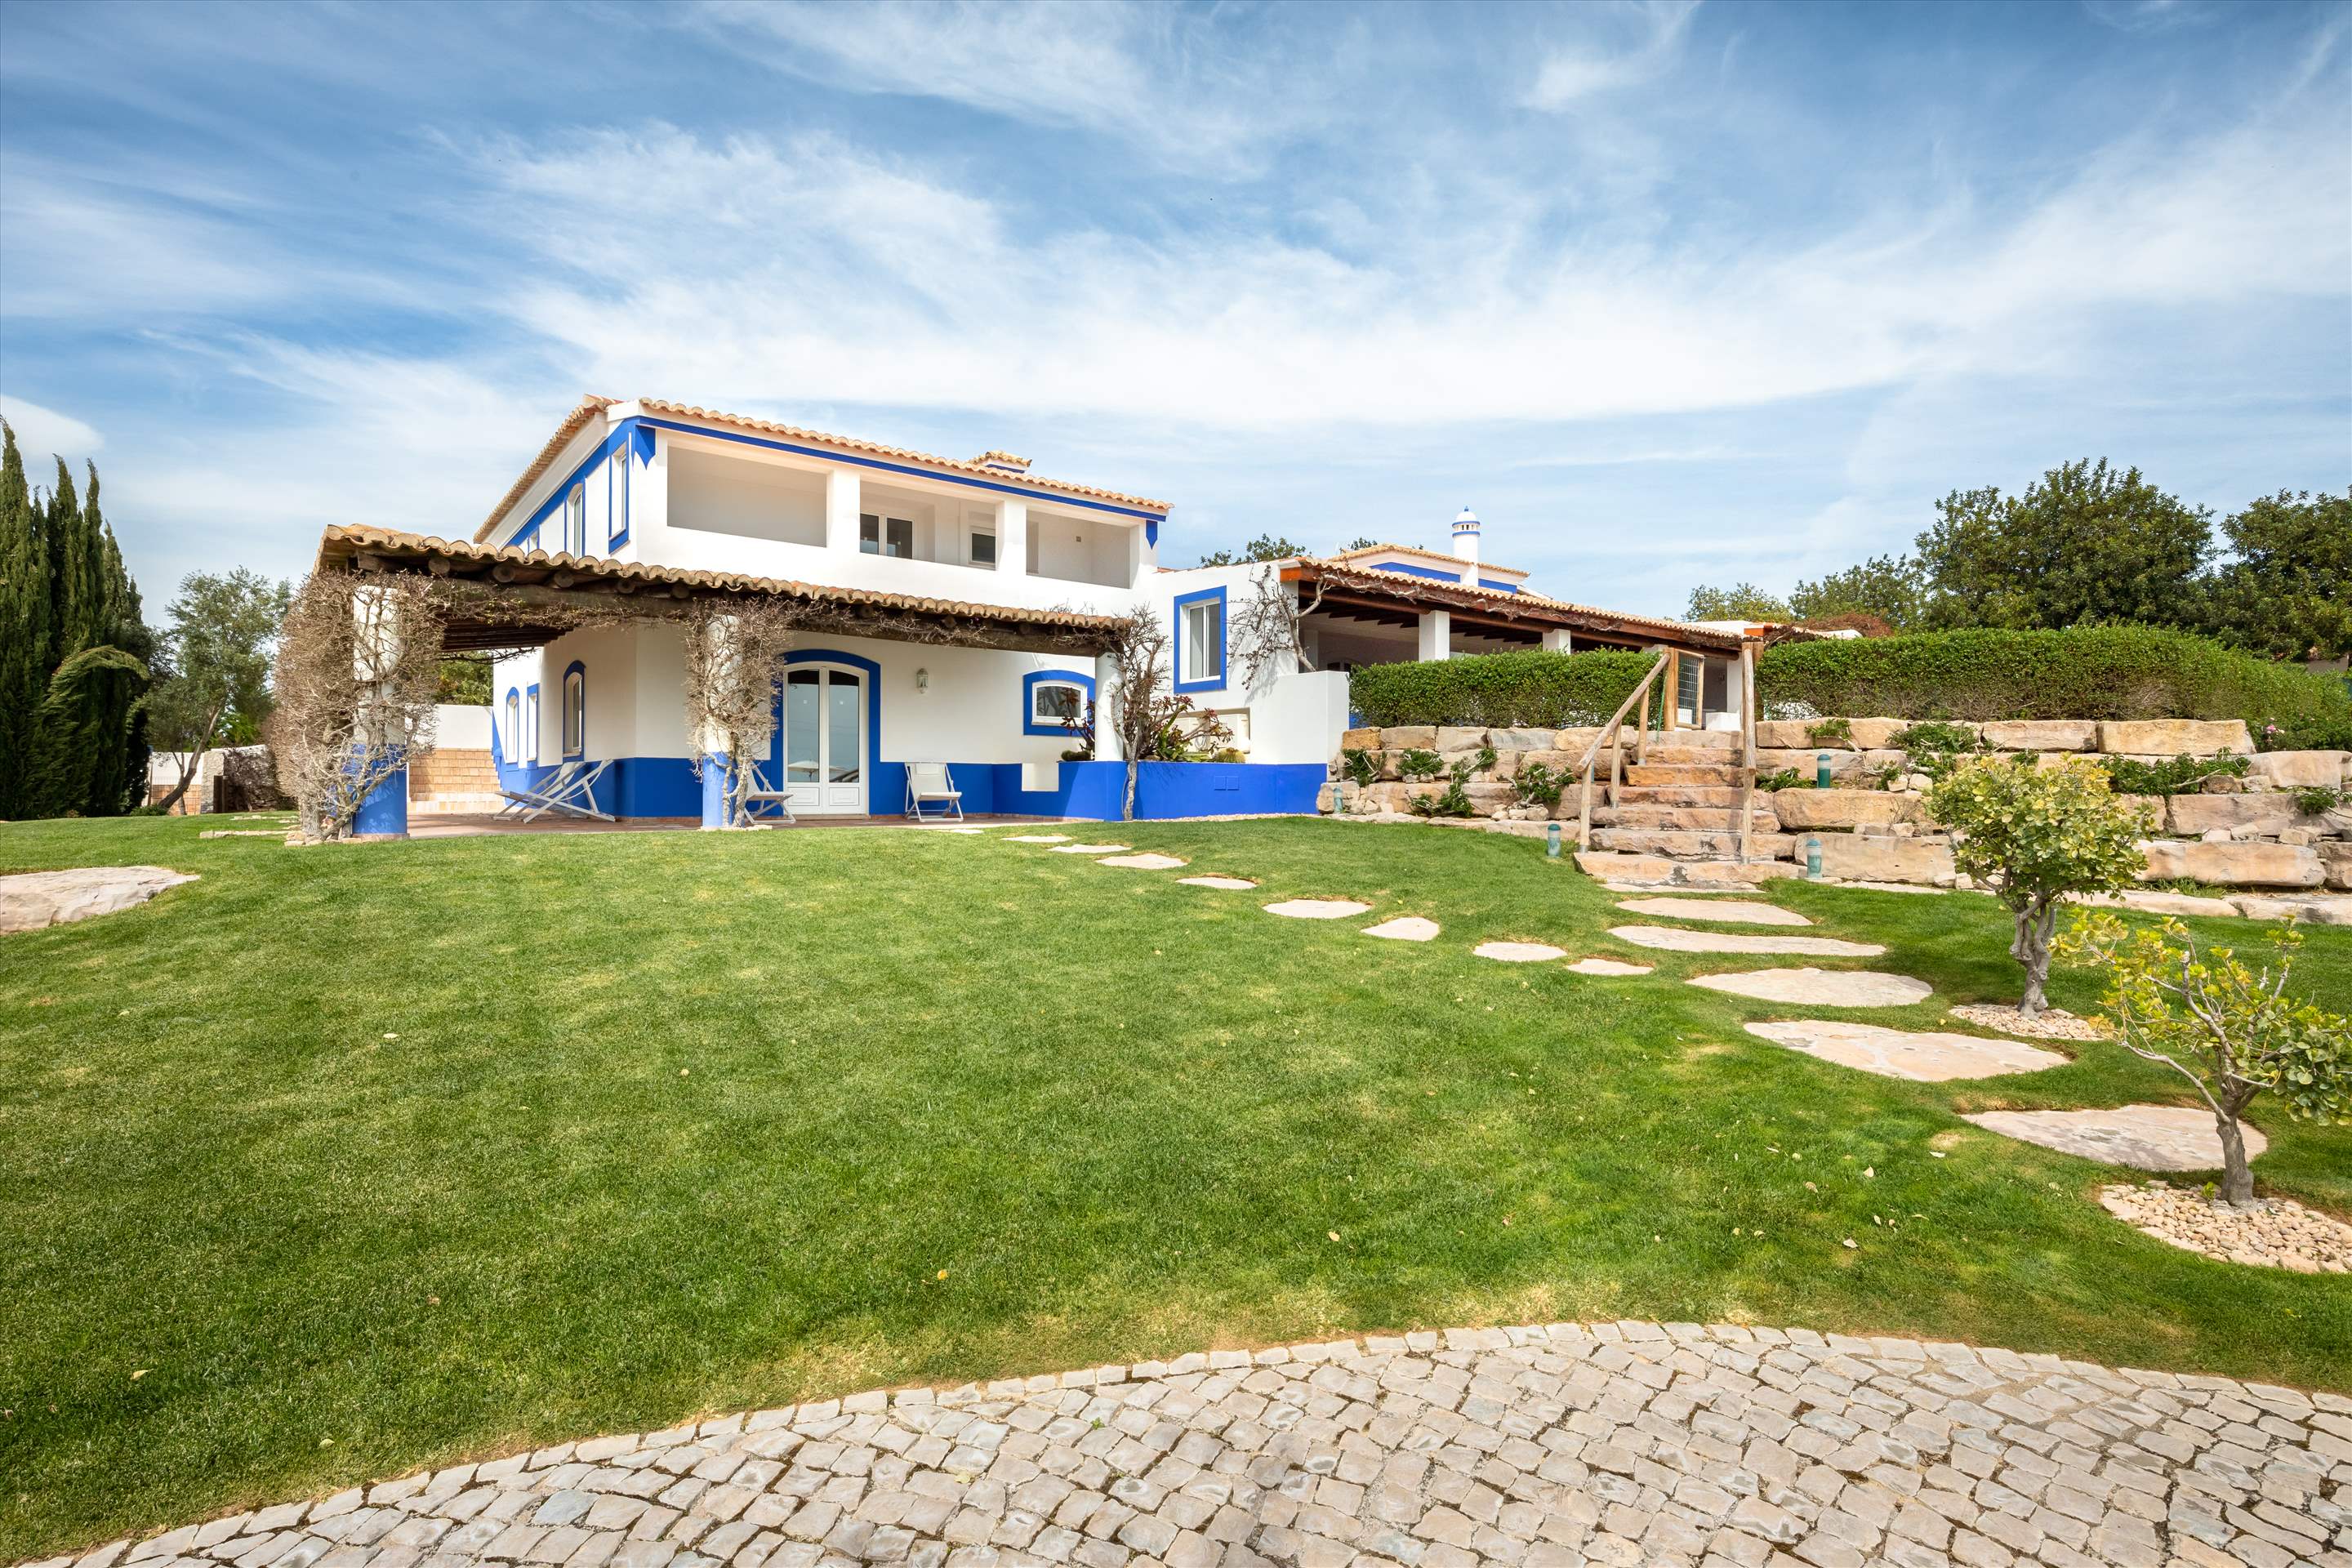 Casa da Montanha, up to 10 persons, 5 bedroom villa in Vilamoura Area, Algarve Photo #5